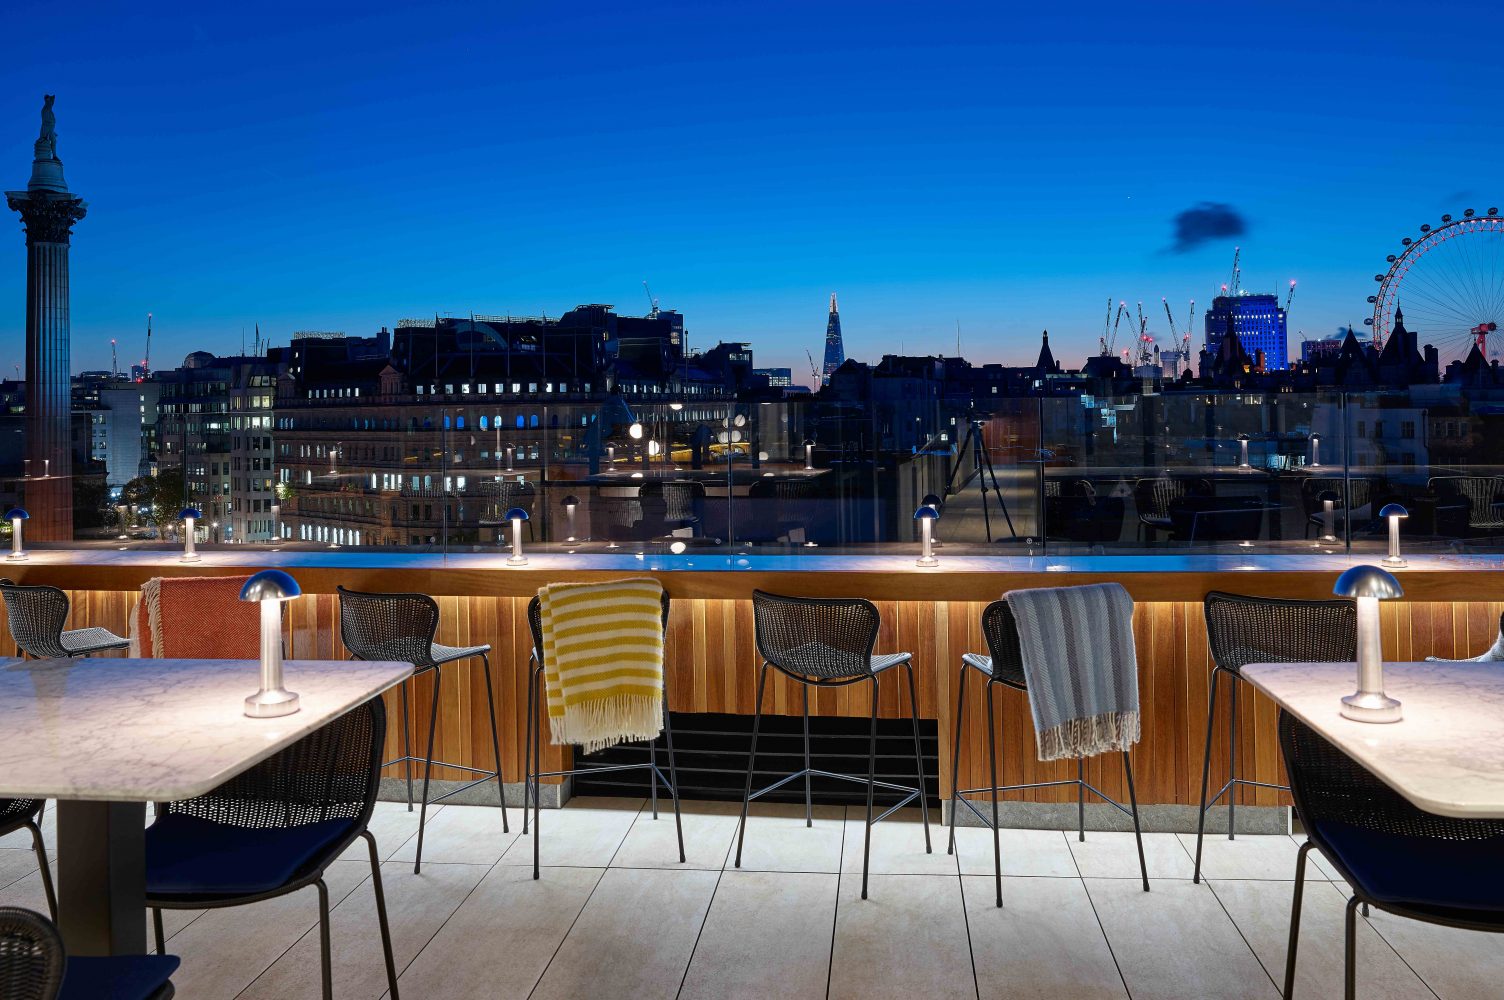 St james - best roof bars london